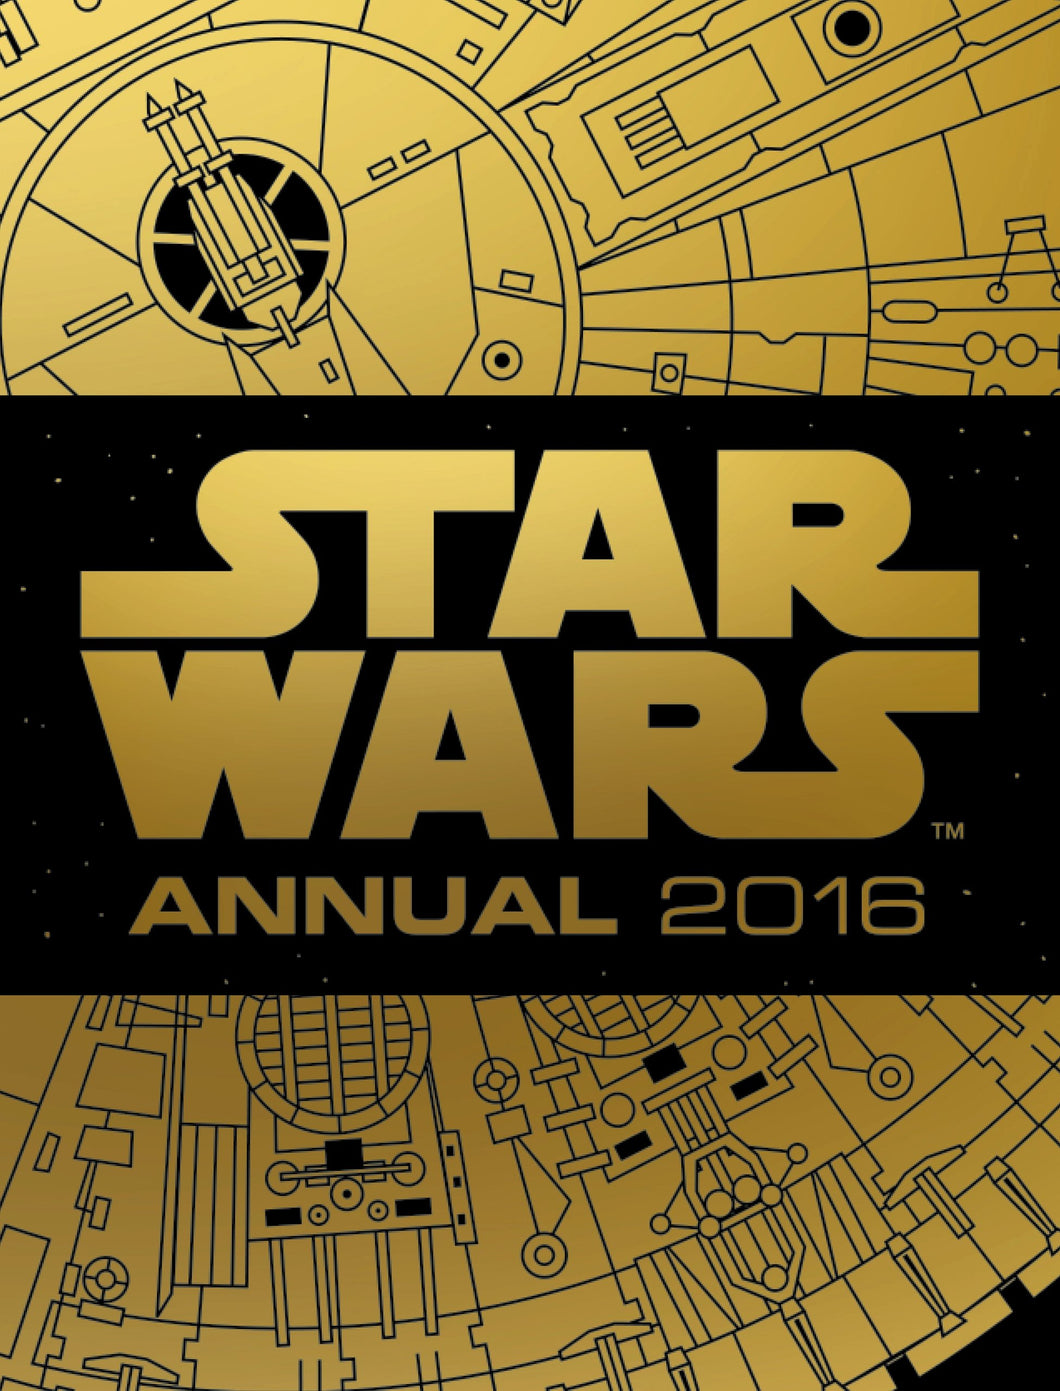 Star Wars Annual 2016 (Annuals 2016) UK, Egmont Publishing